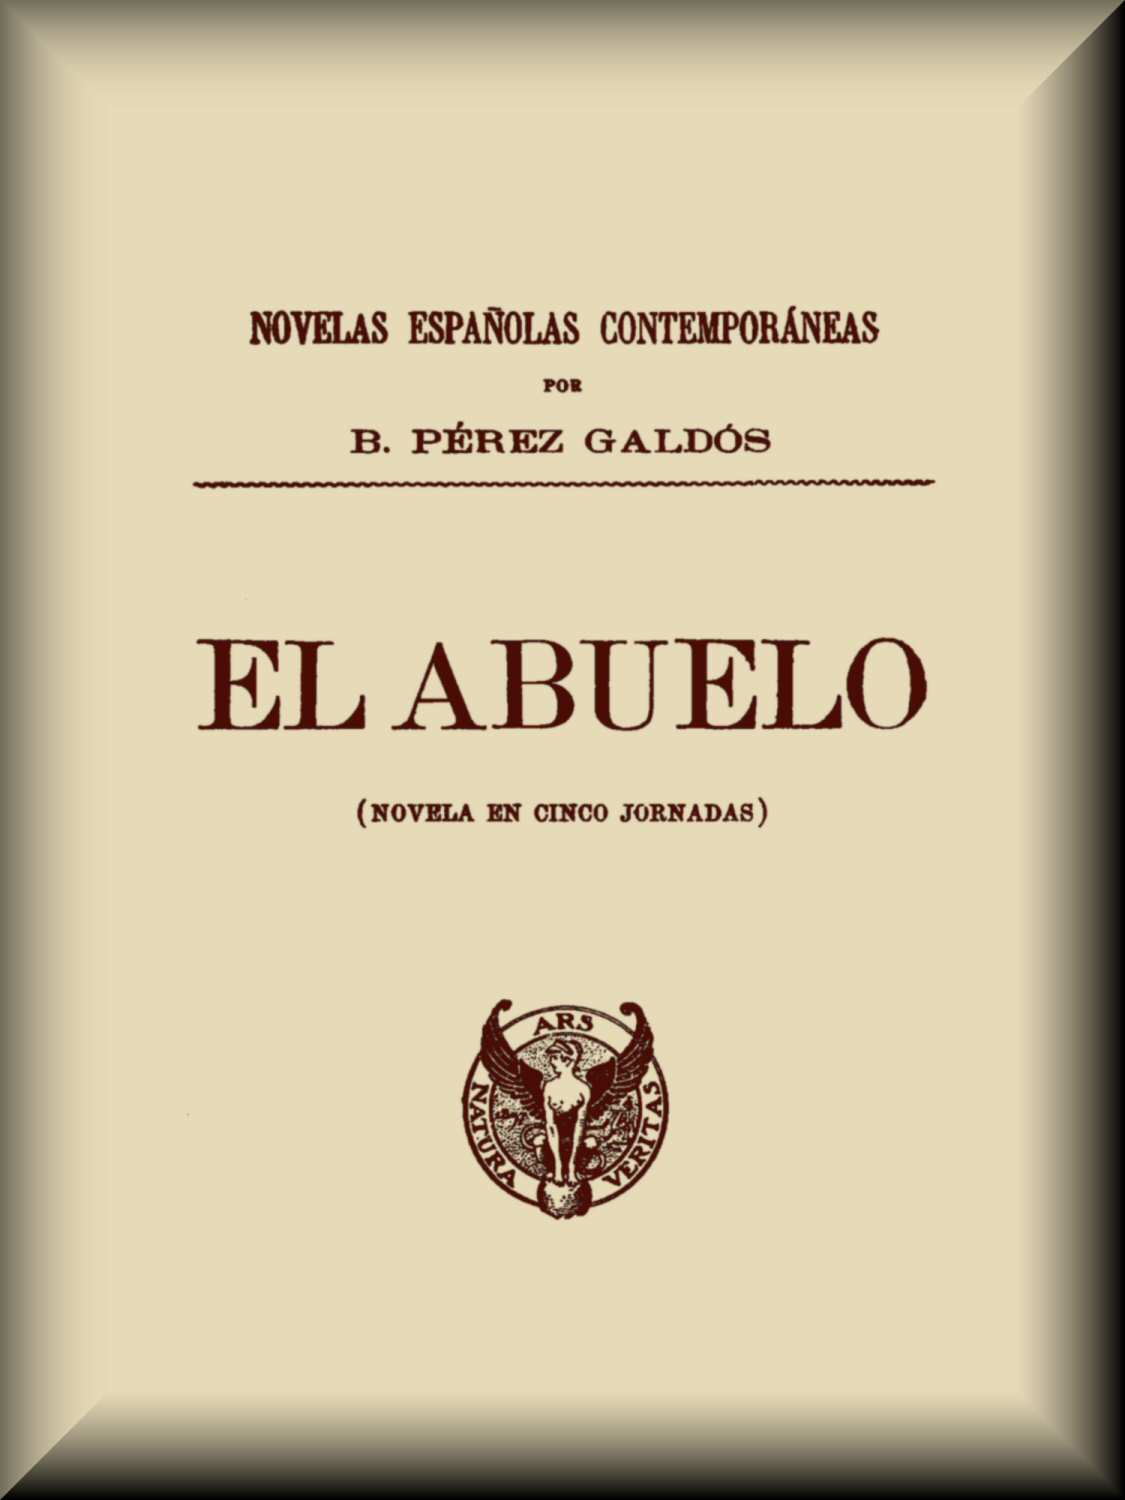 receipt Rationalization Persecute El abuelo, by Benito Pérez Galdós—A Project Gutenberg eBook